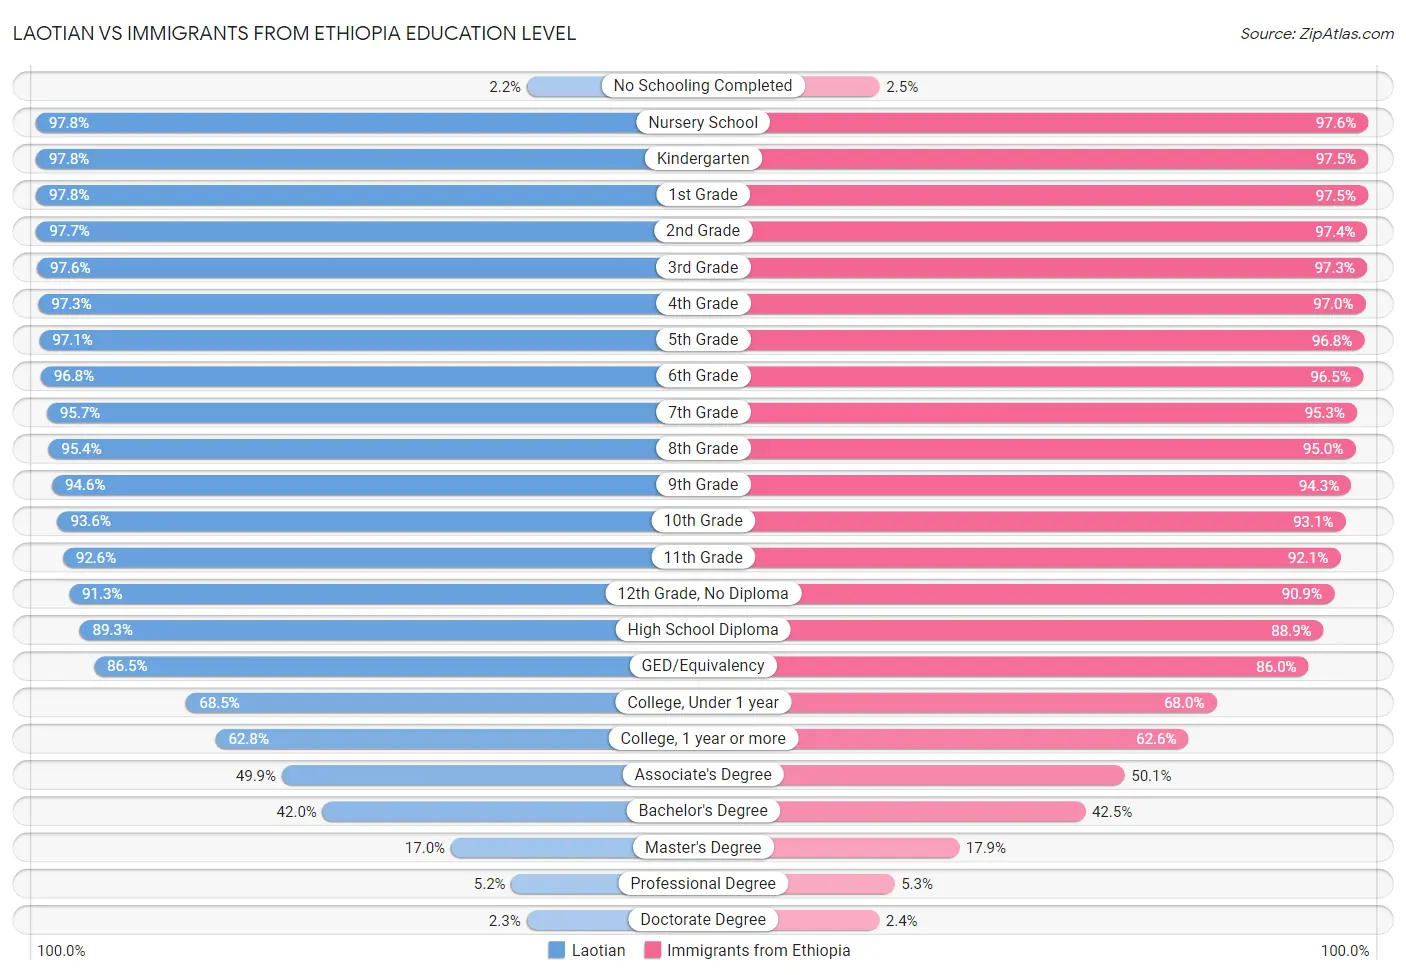 Laotian vs Immigrants from Ethiopia Education Level